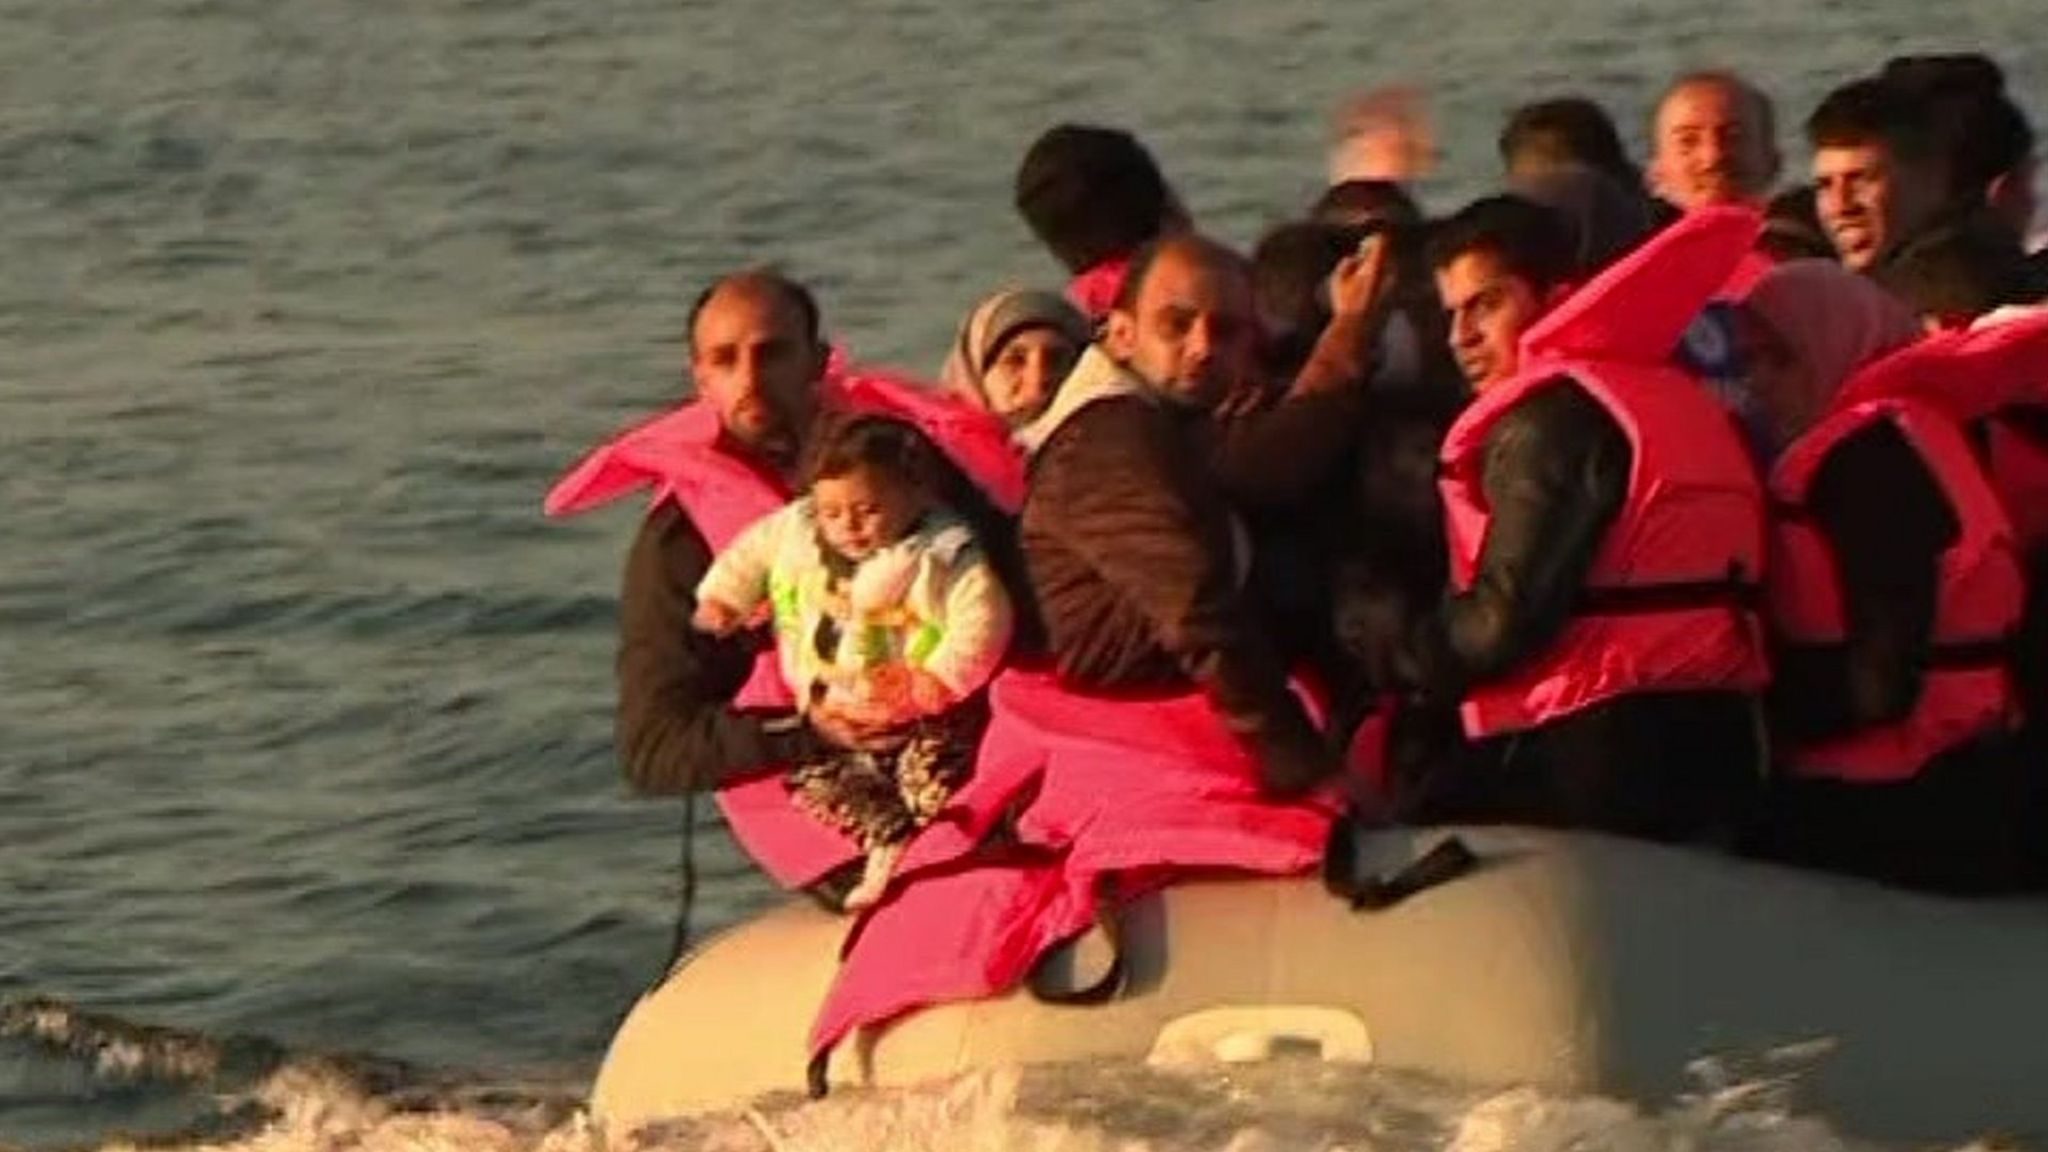 Refugees arriving in Lesbos